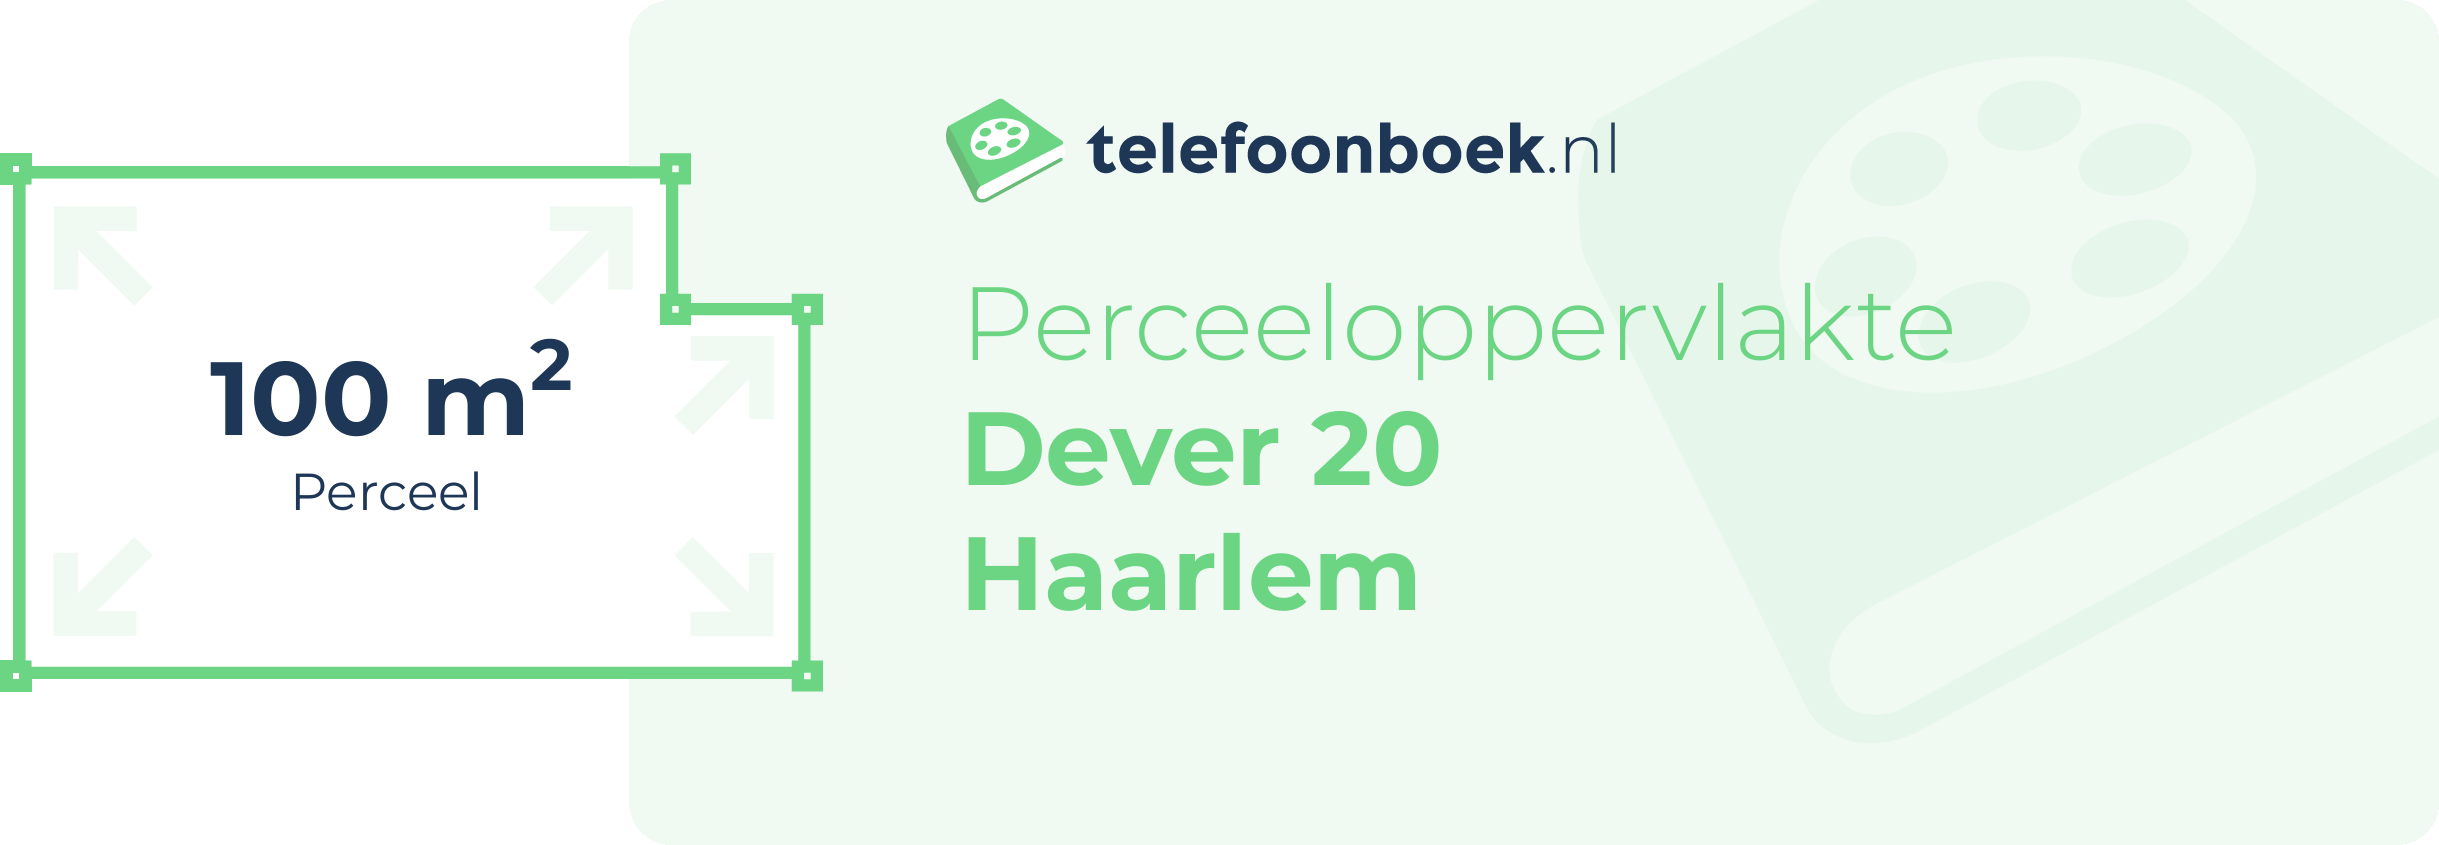 Perceeloppervlakte Dever 20 Haarlem